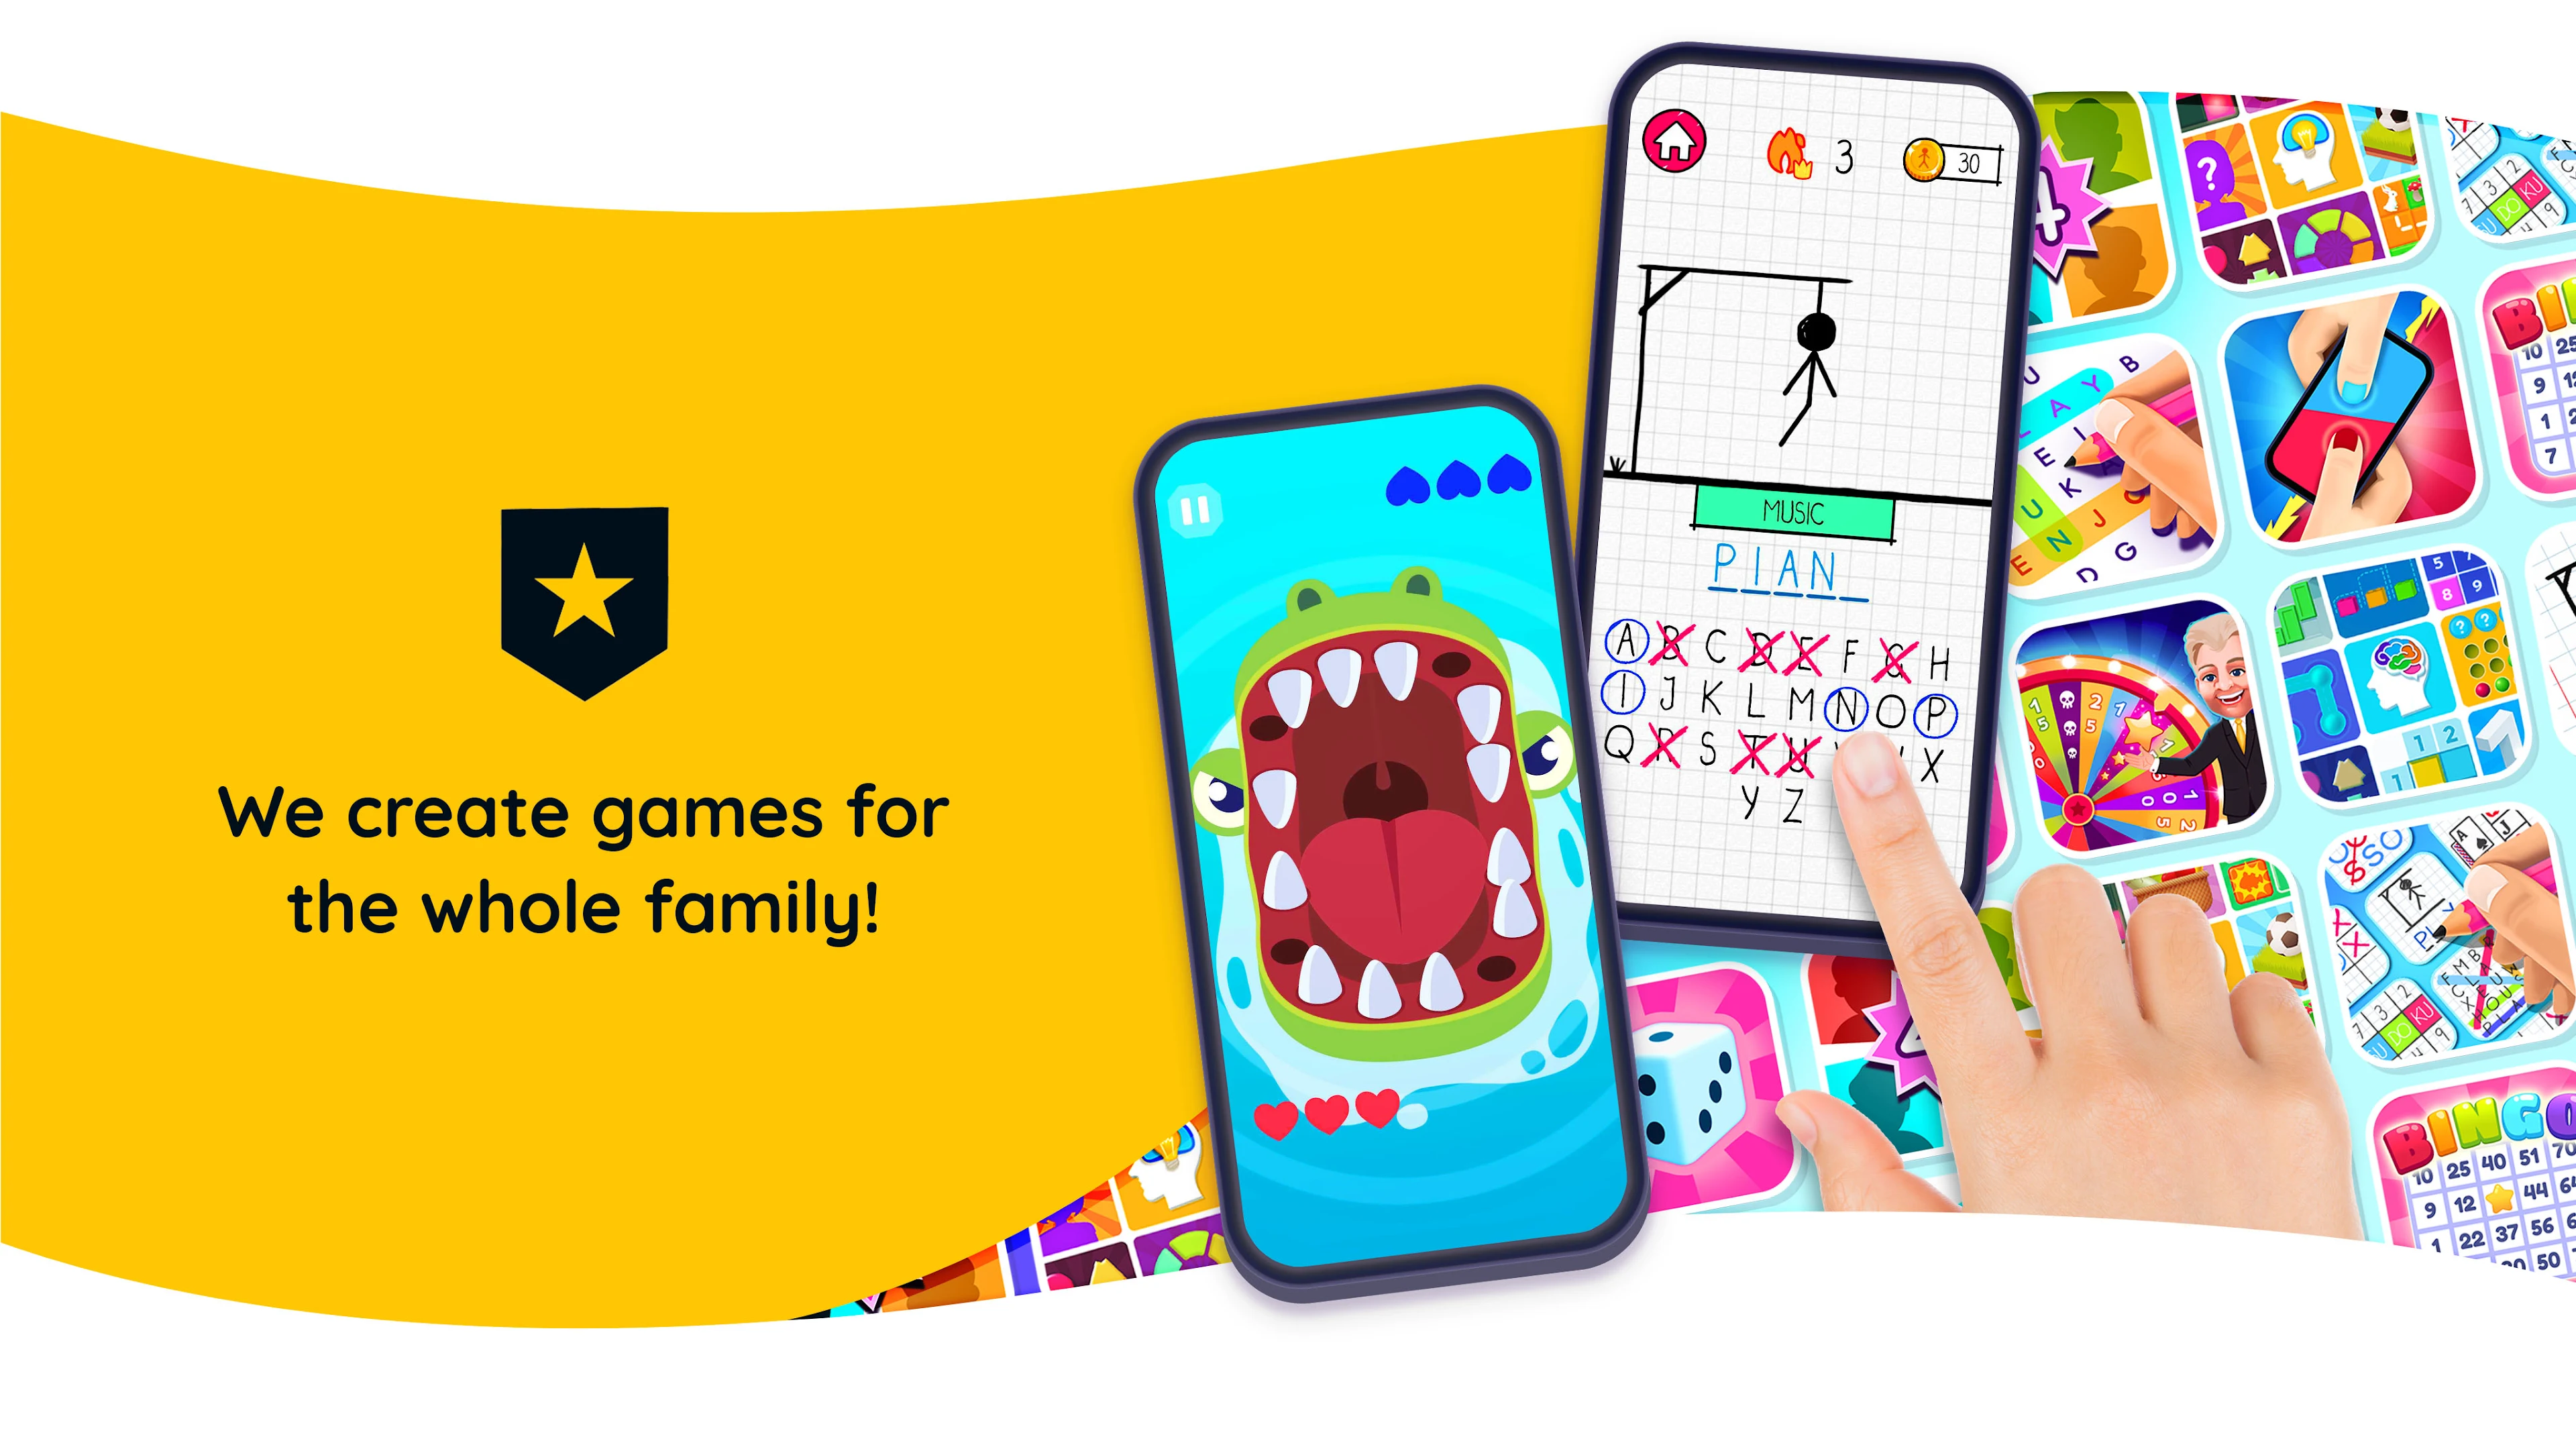 Passatempos - 30 Jogos offline – Apps no Google Play